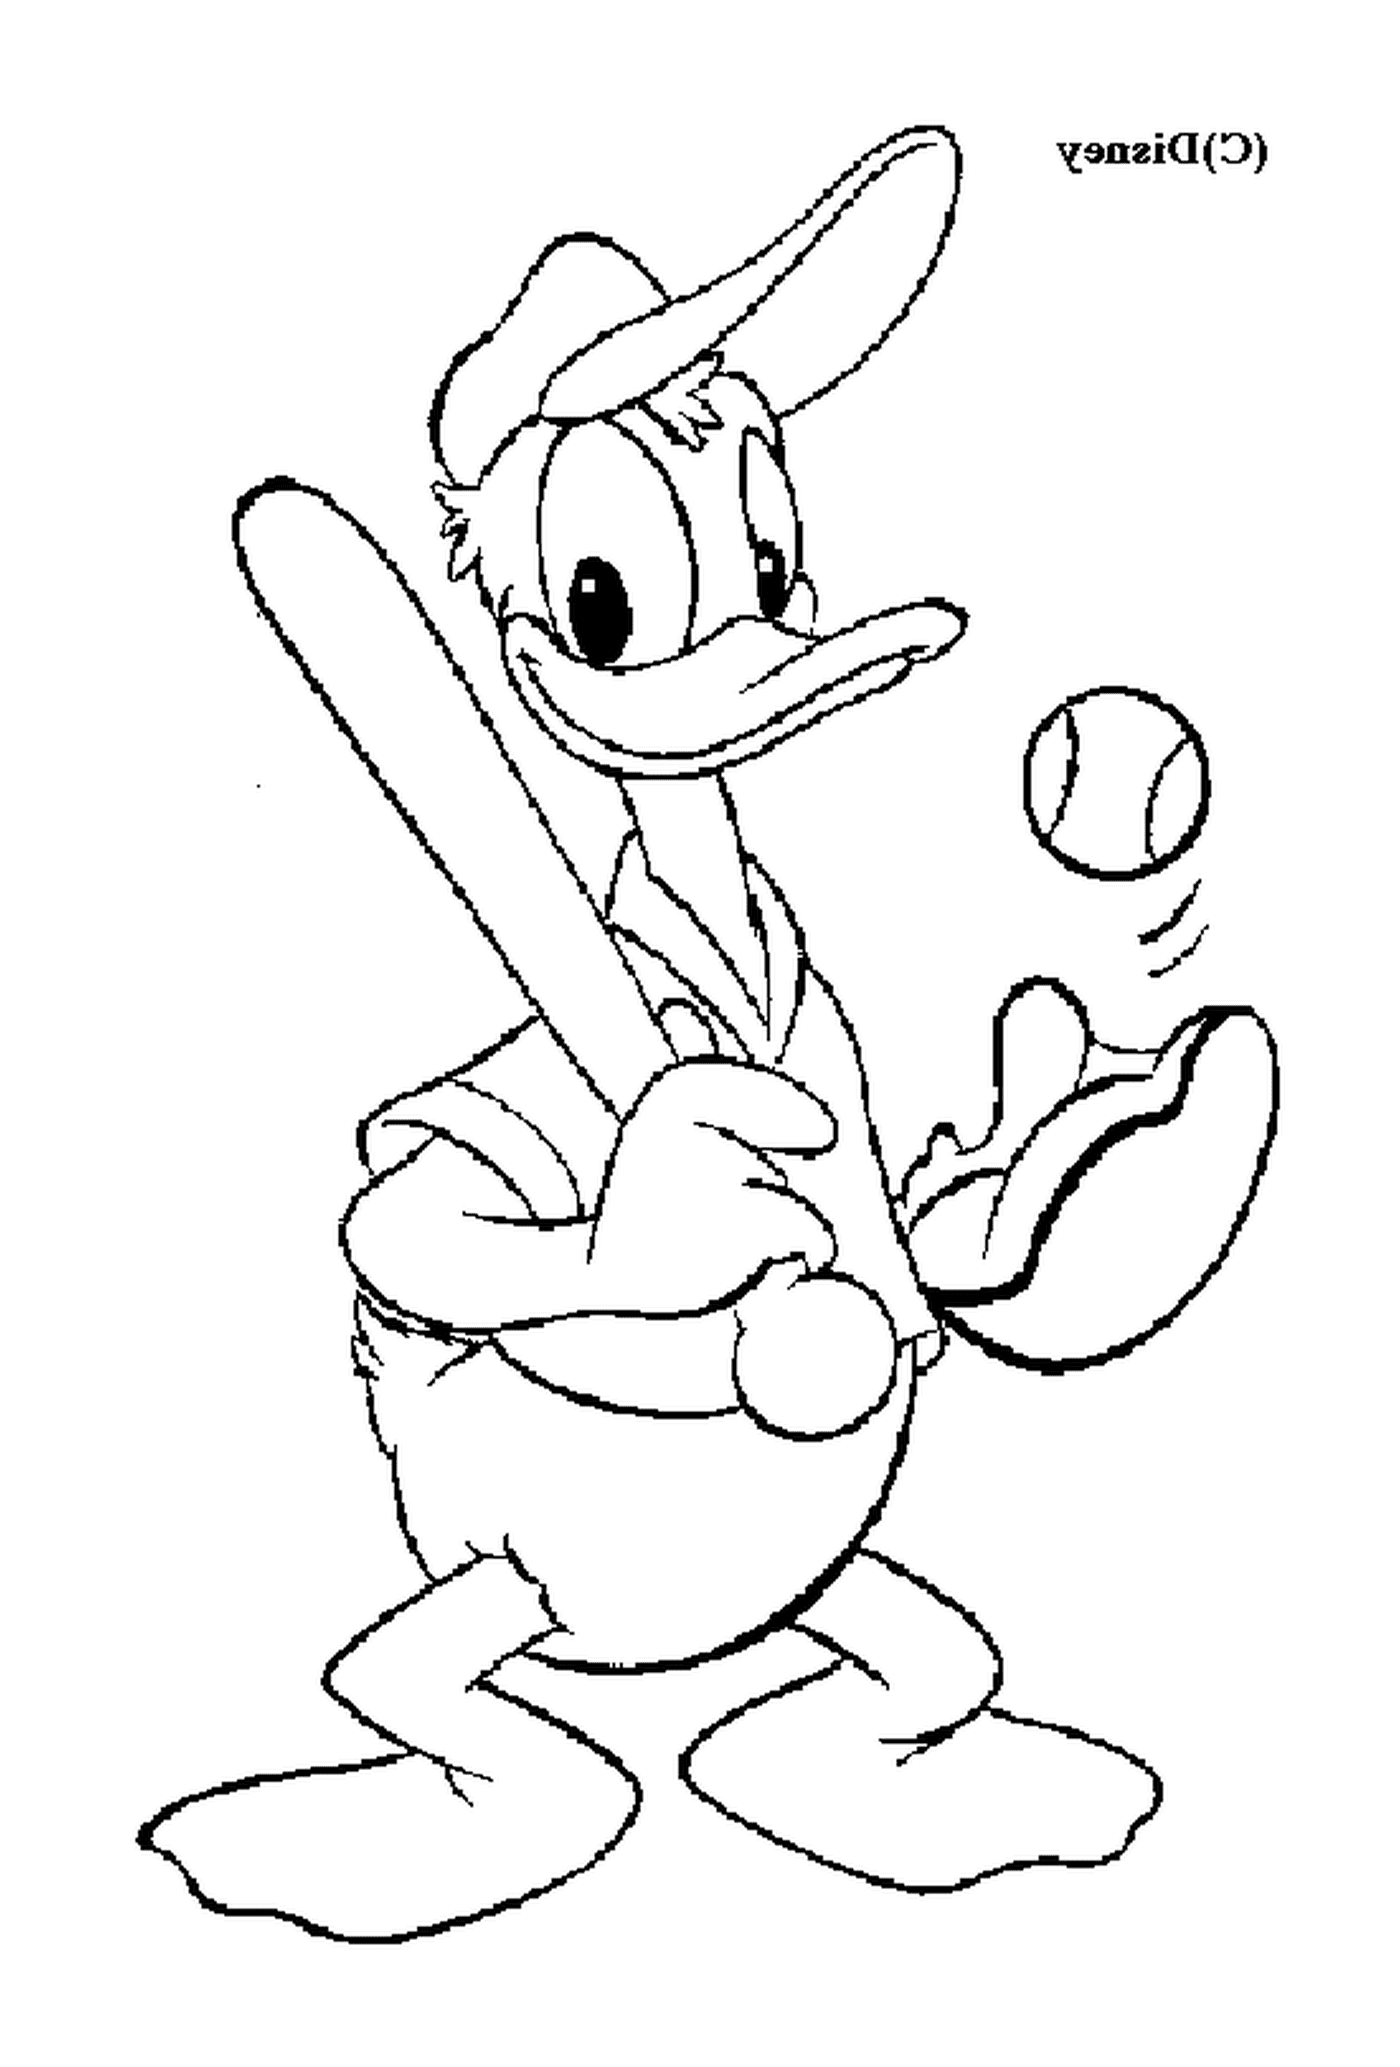  Donald spielt Baseball mit Eifer 